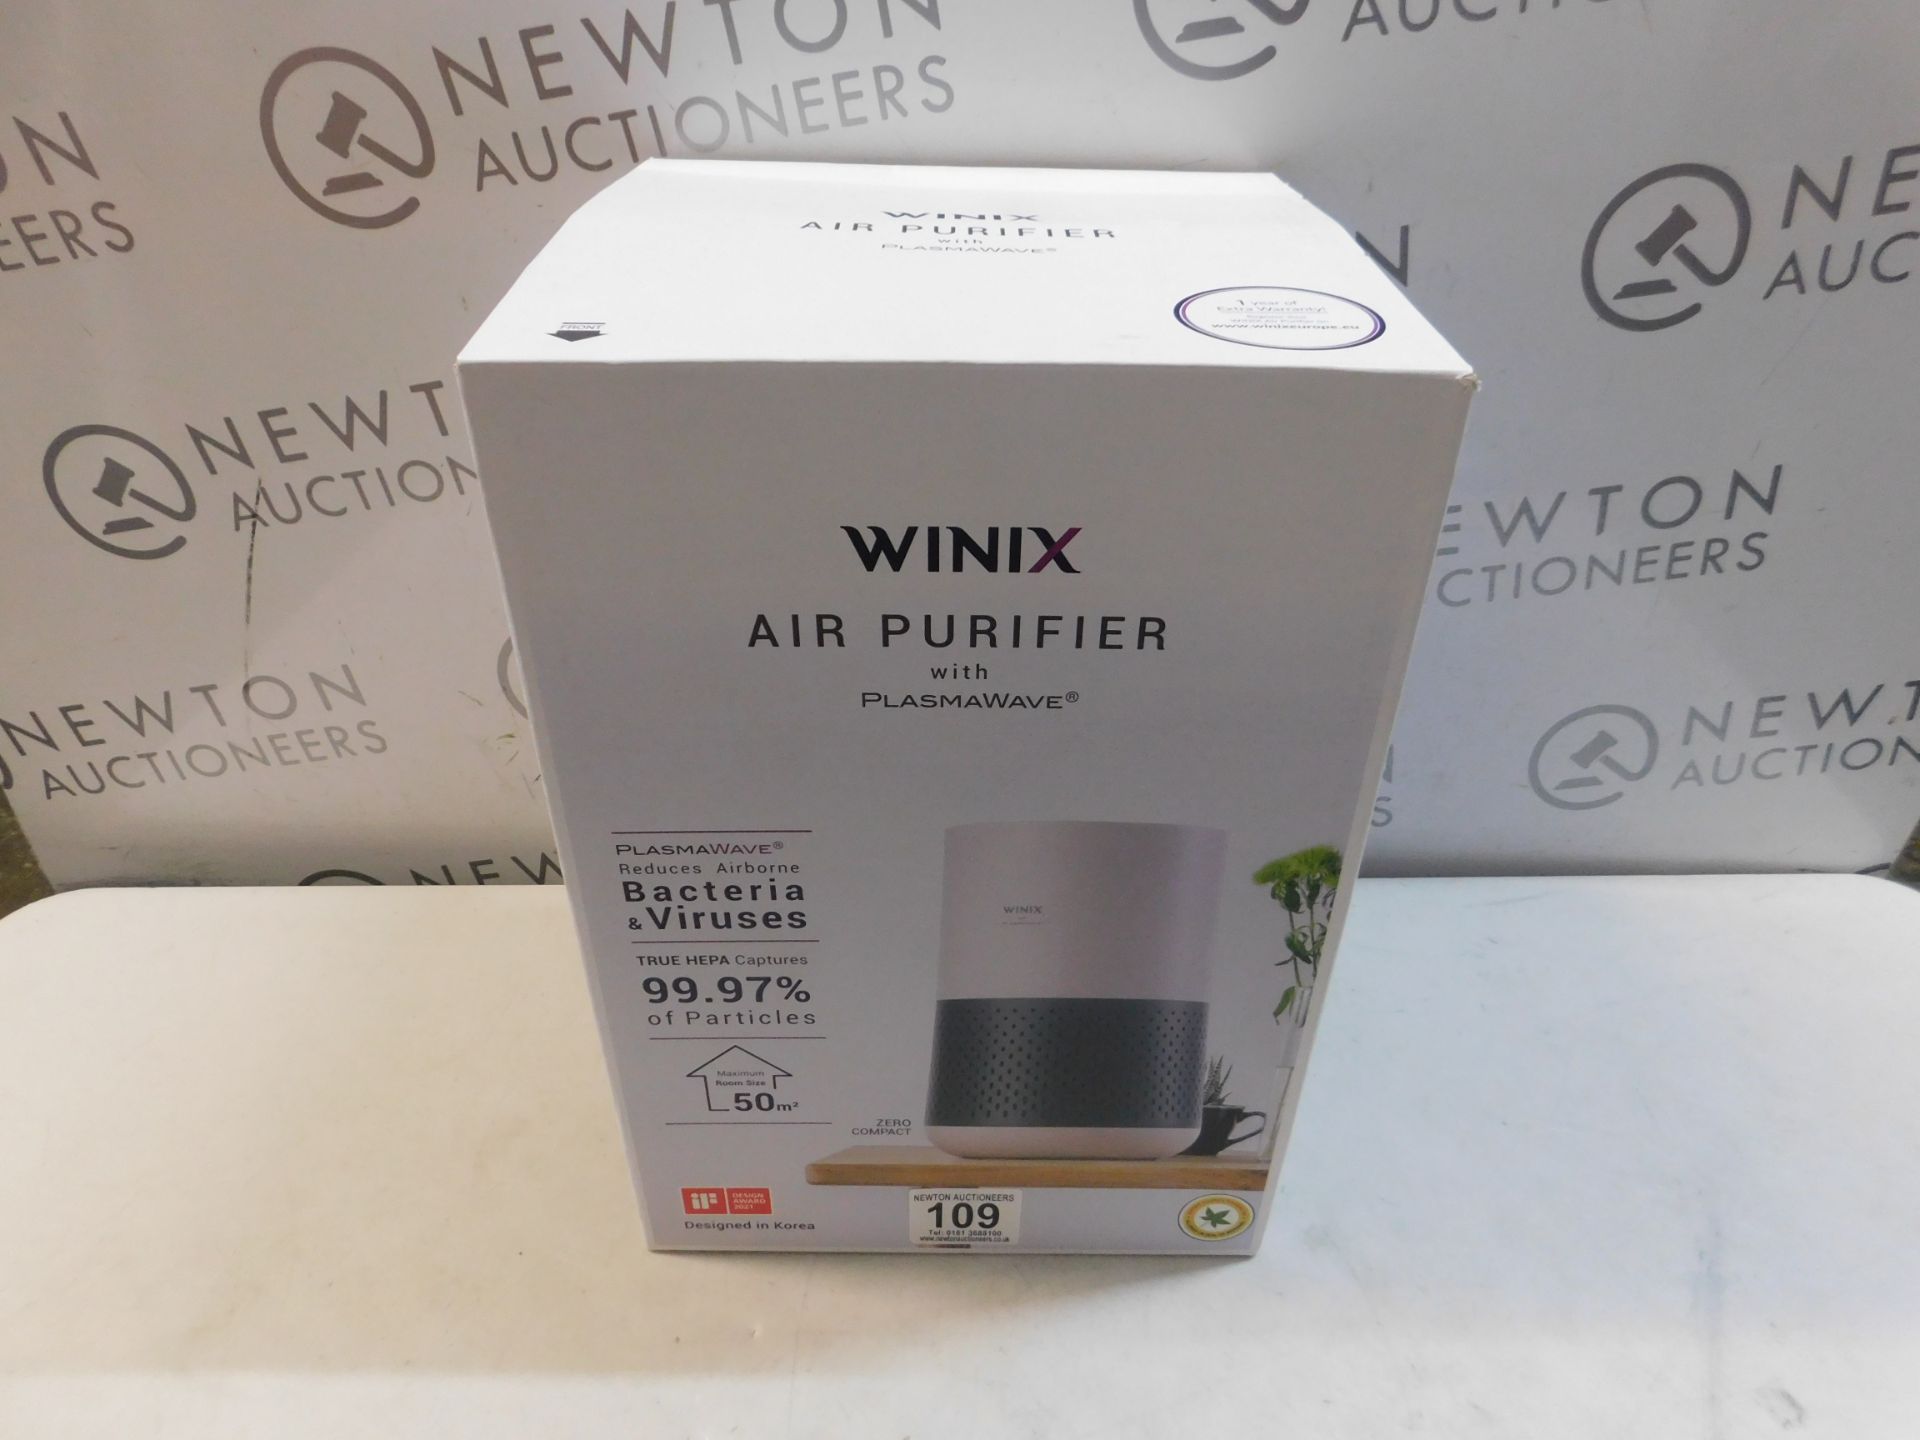 1 BOXED WINIX ZERO COMPACT AIR PURIFIER 1022-0226-07, 50M RRP Â£119.99